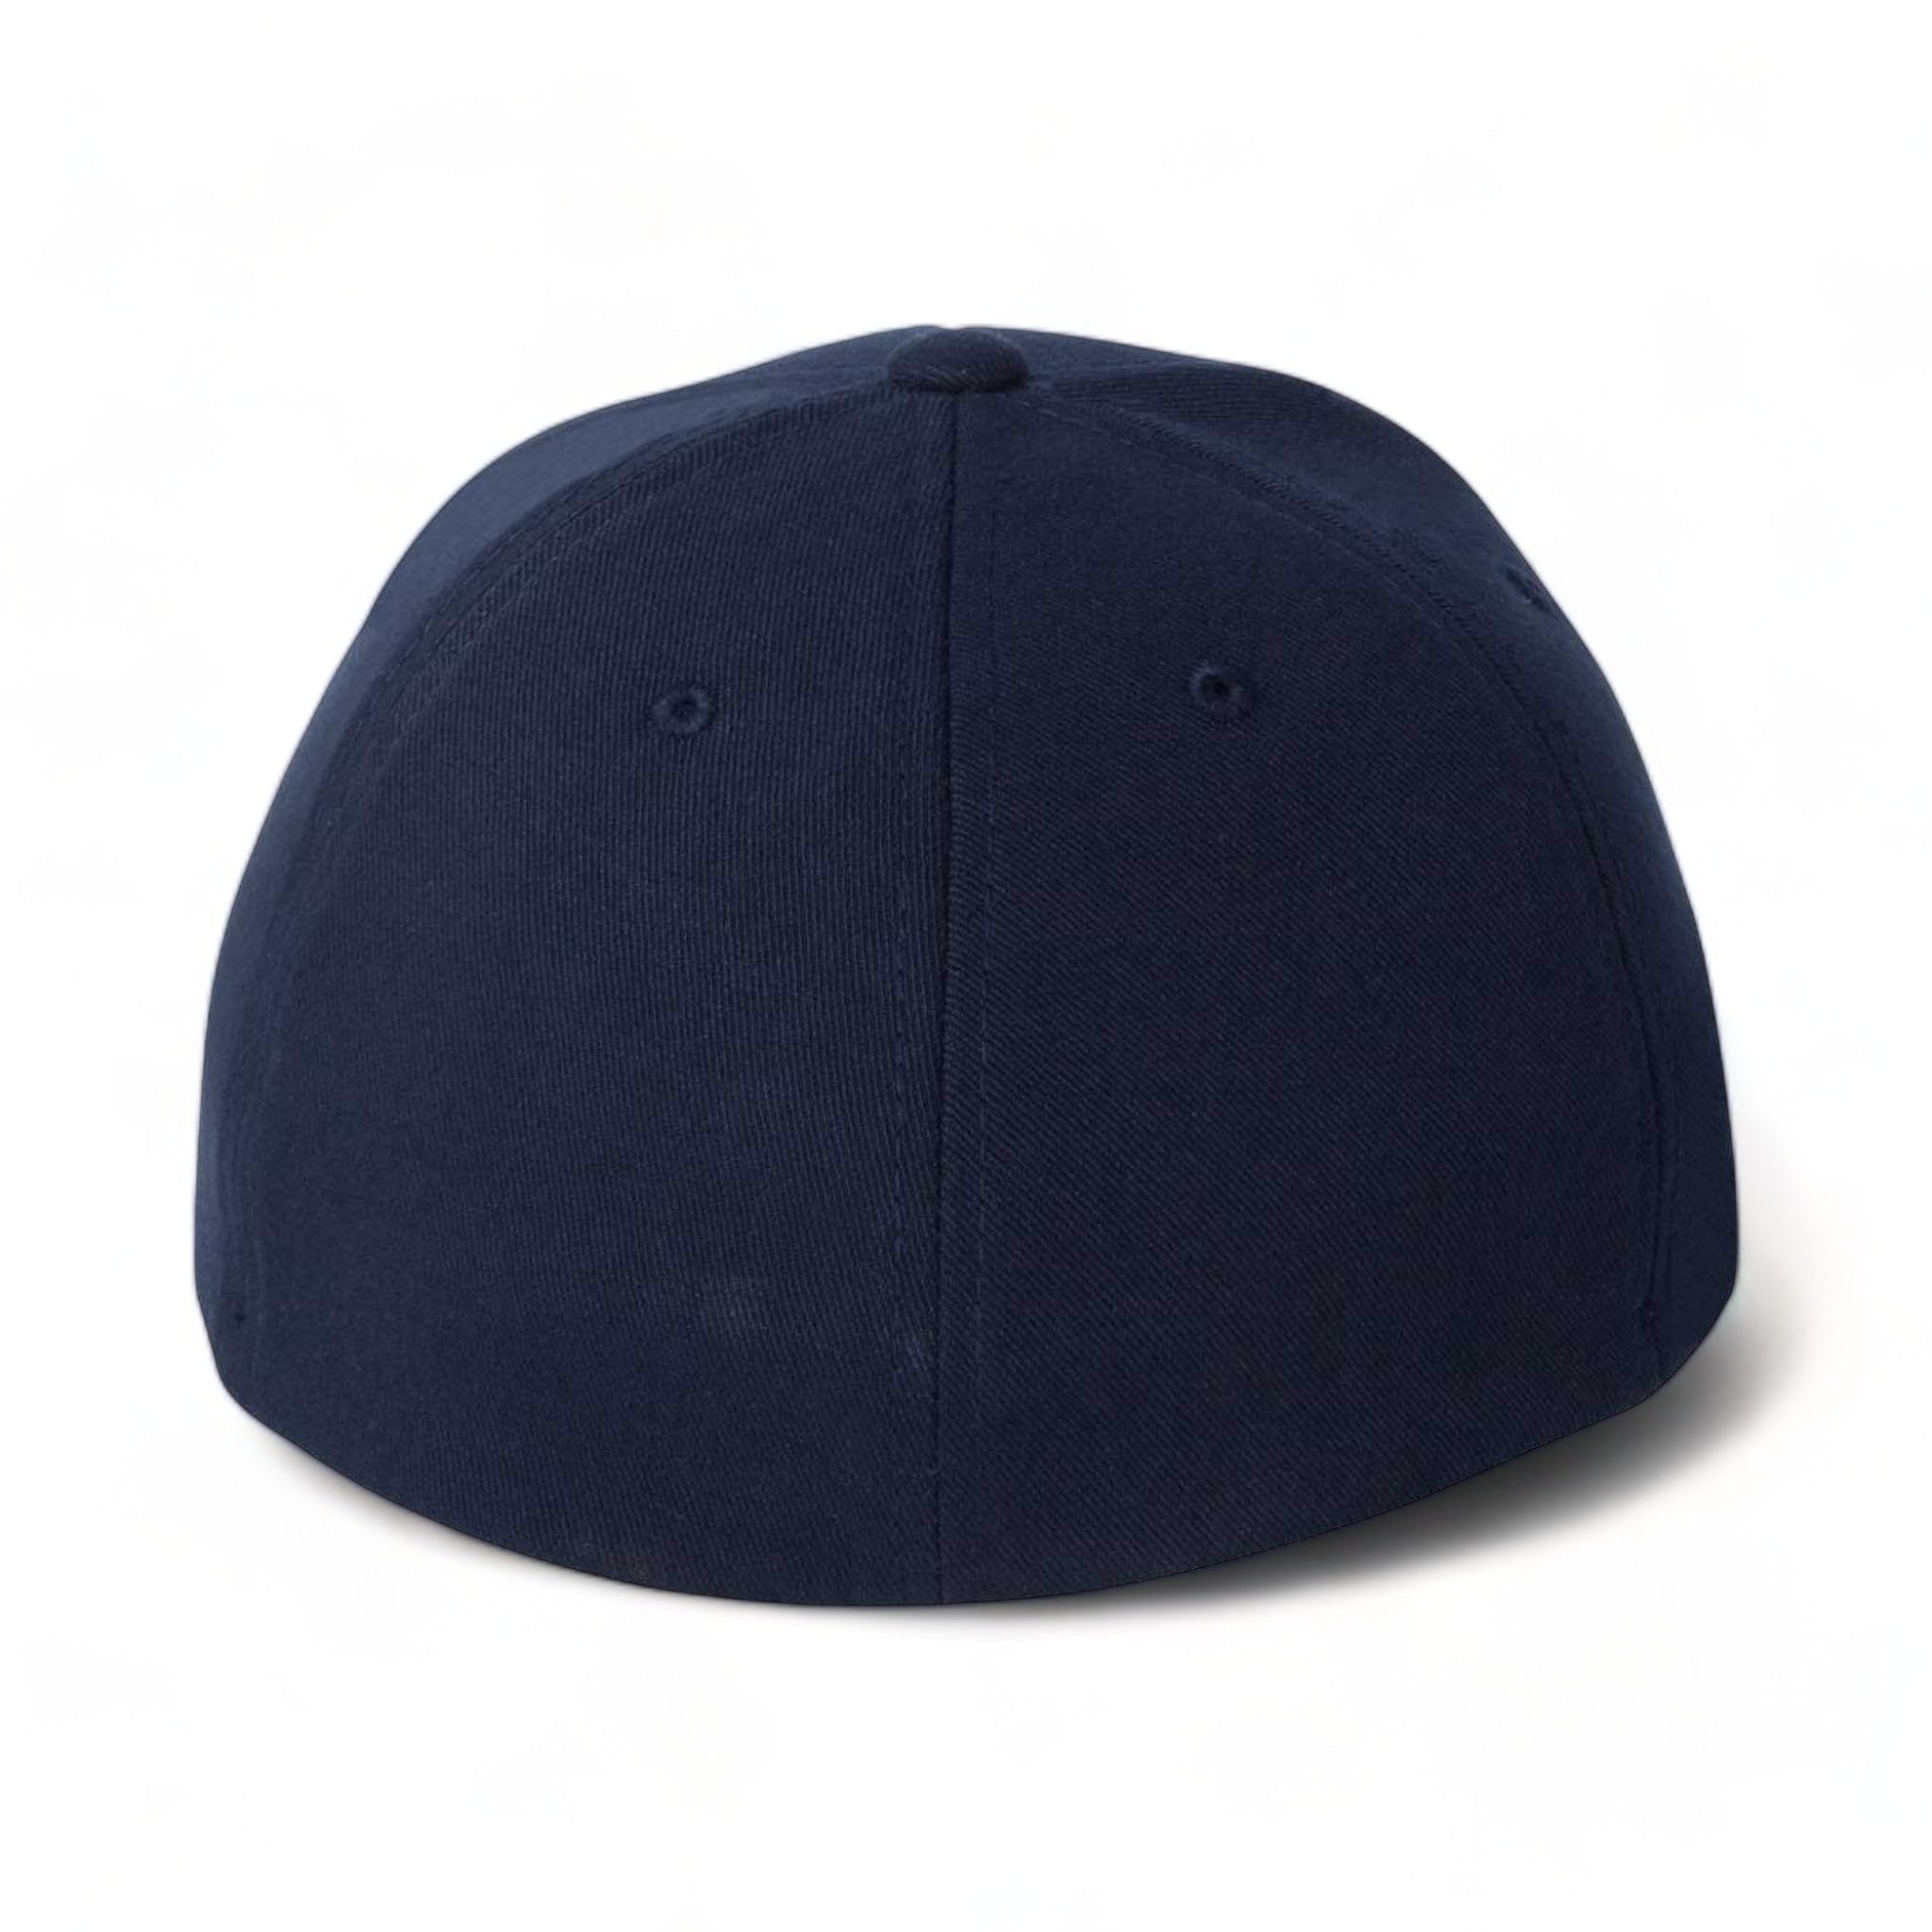 Back view of Flexfit 6580 custom hat in dark navy